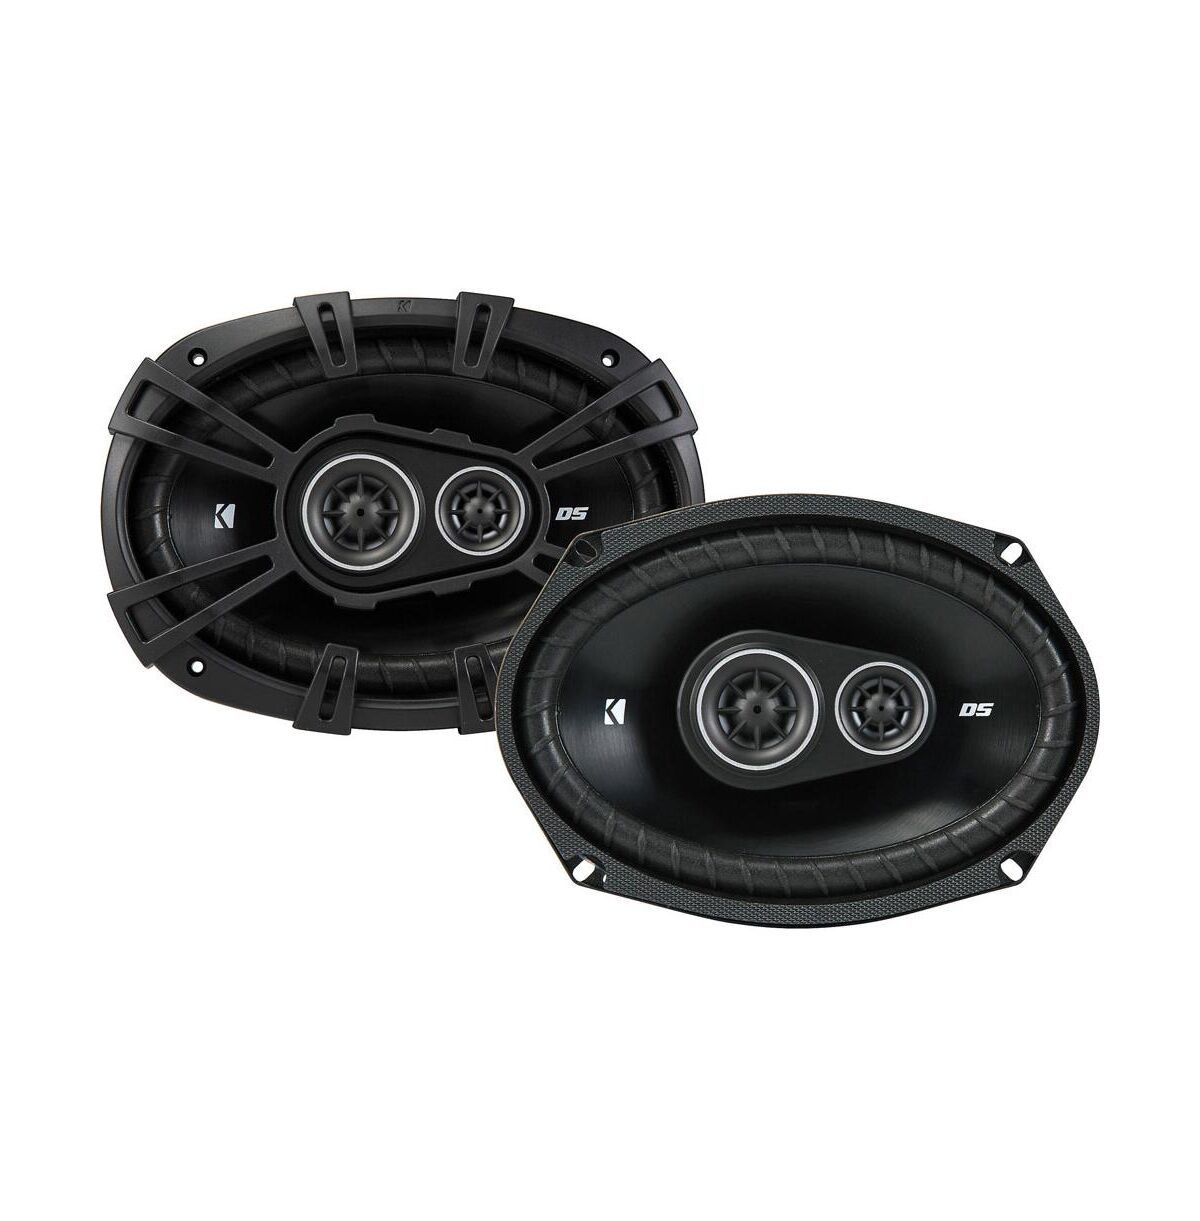 Kicker Ds Series 6x9 3-Way Car Speakers - Black